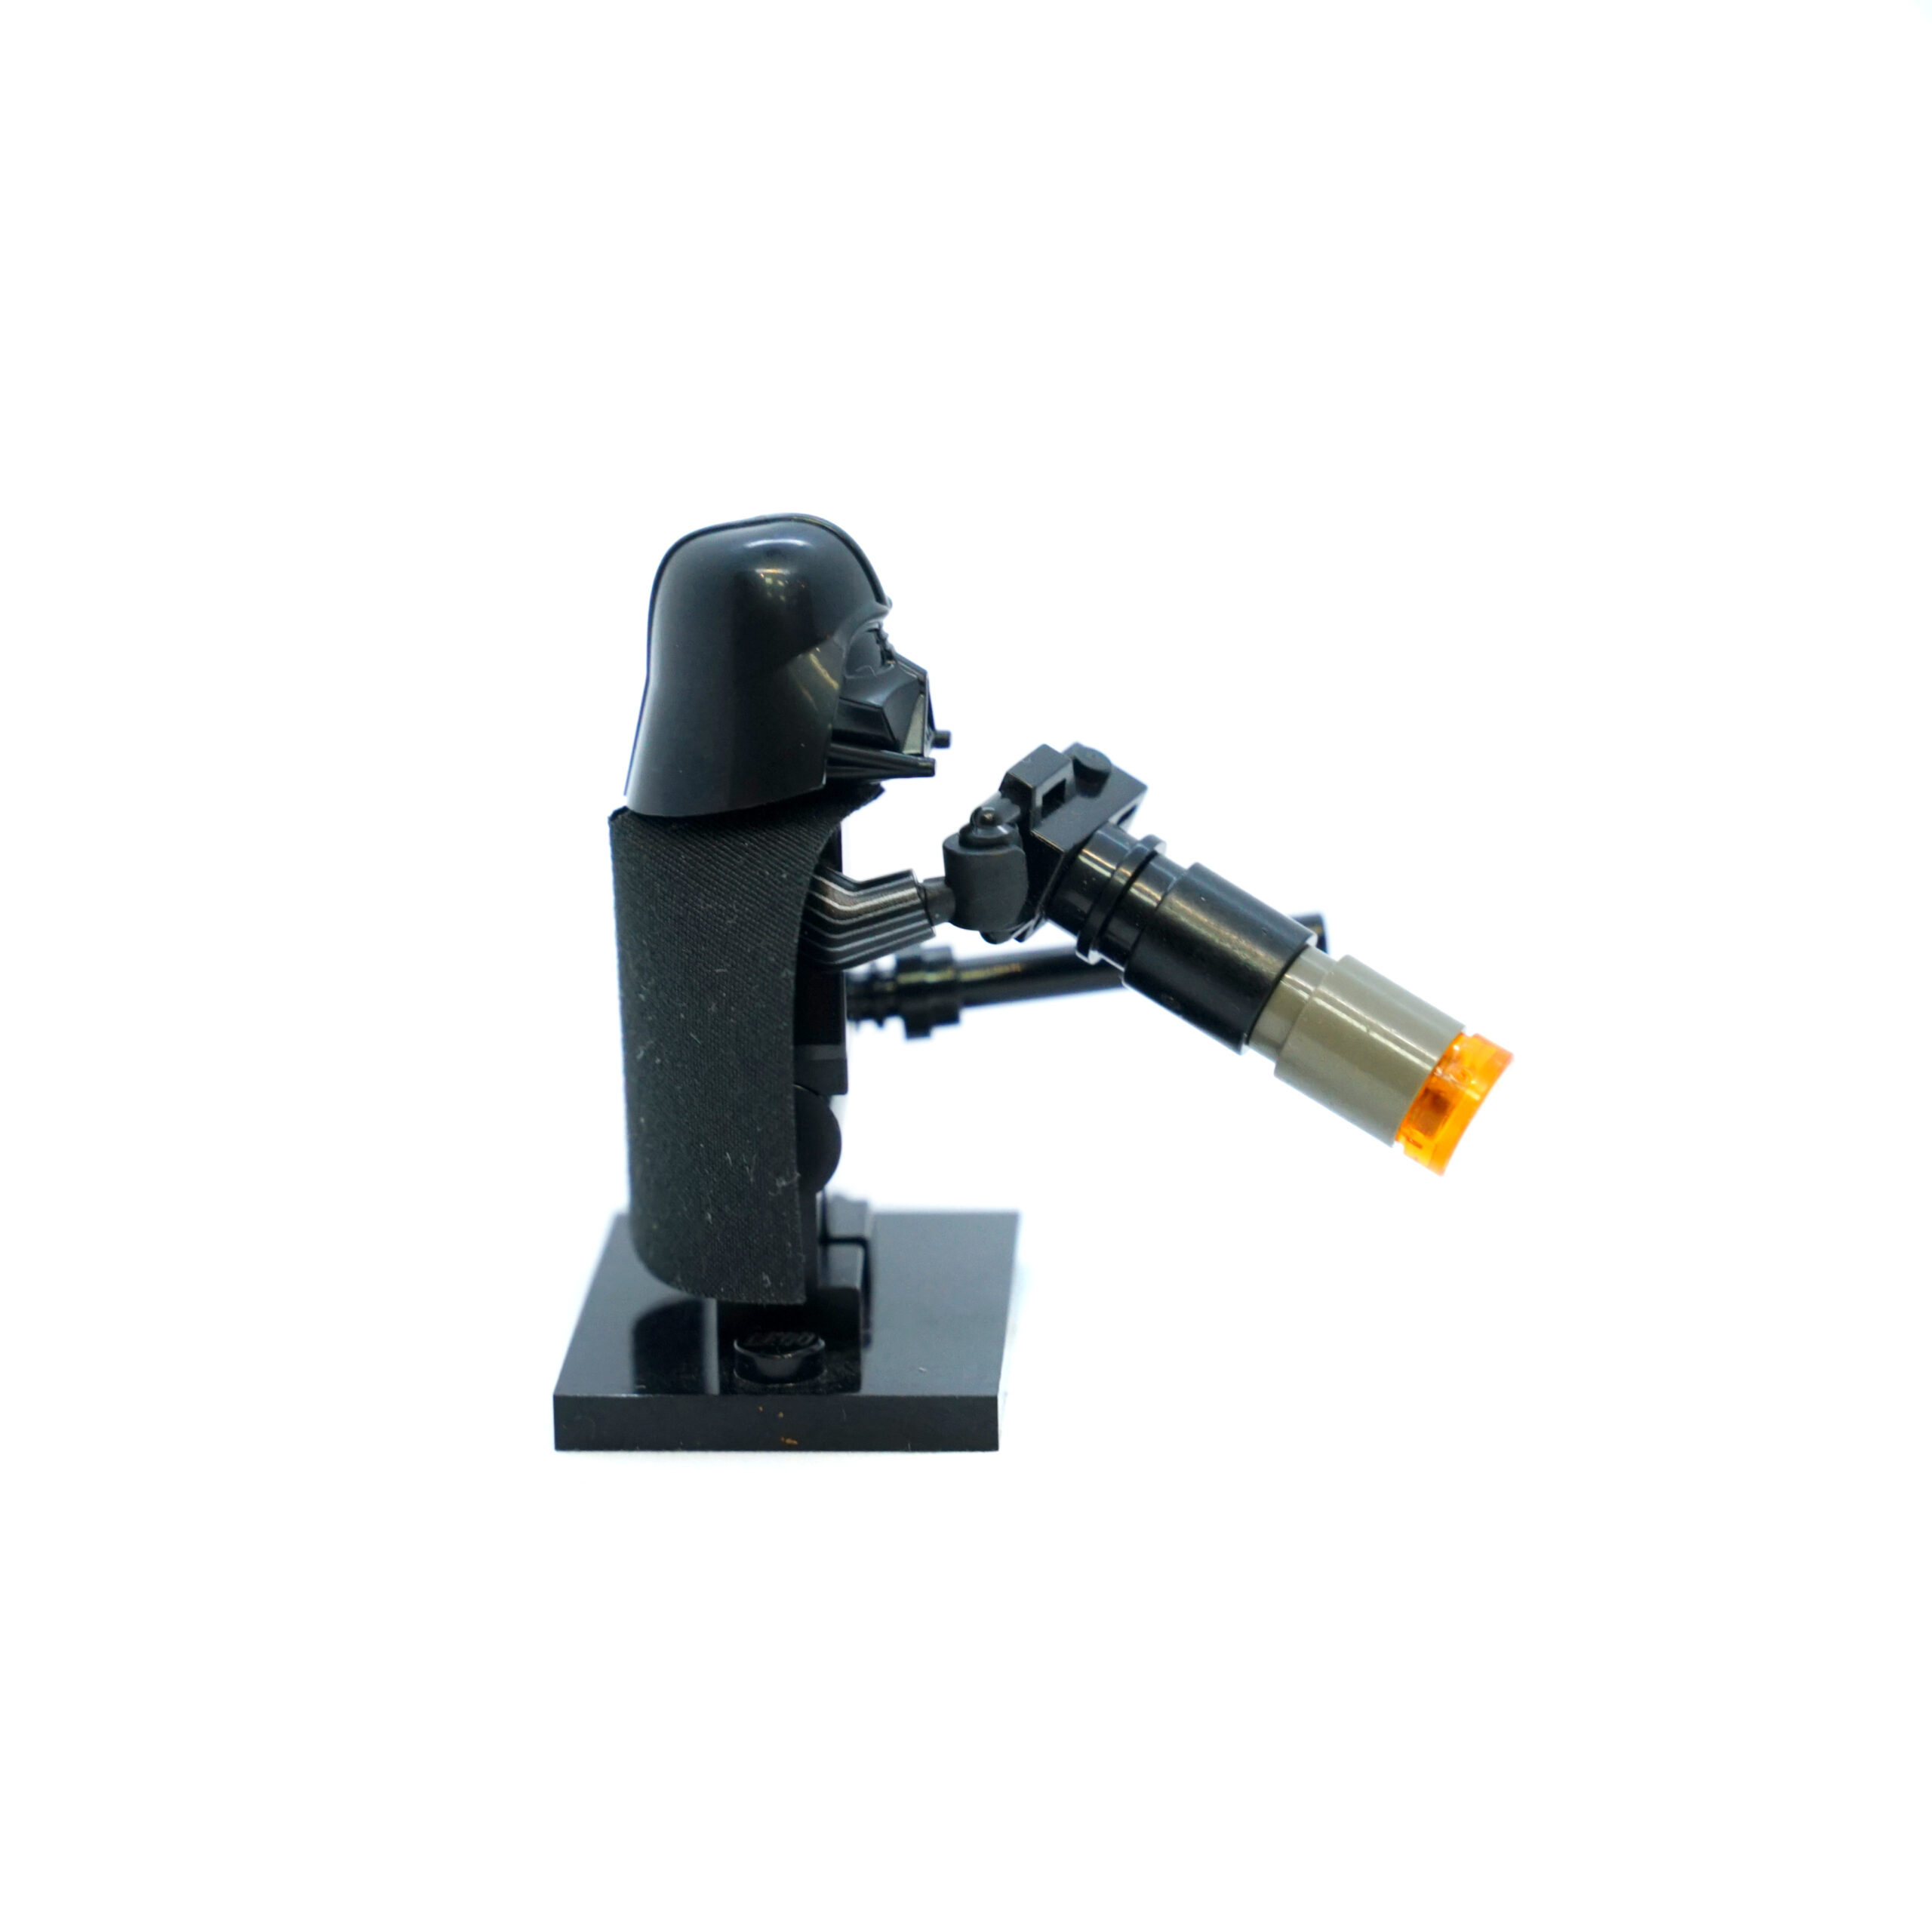 Figurka LEGO Dartth Vader teleobiektyw